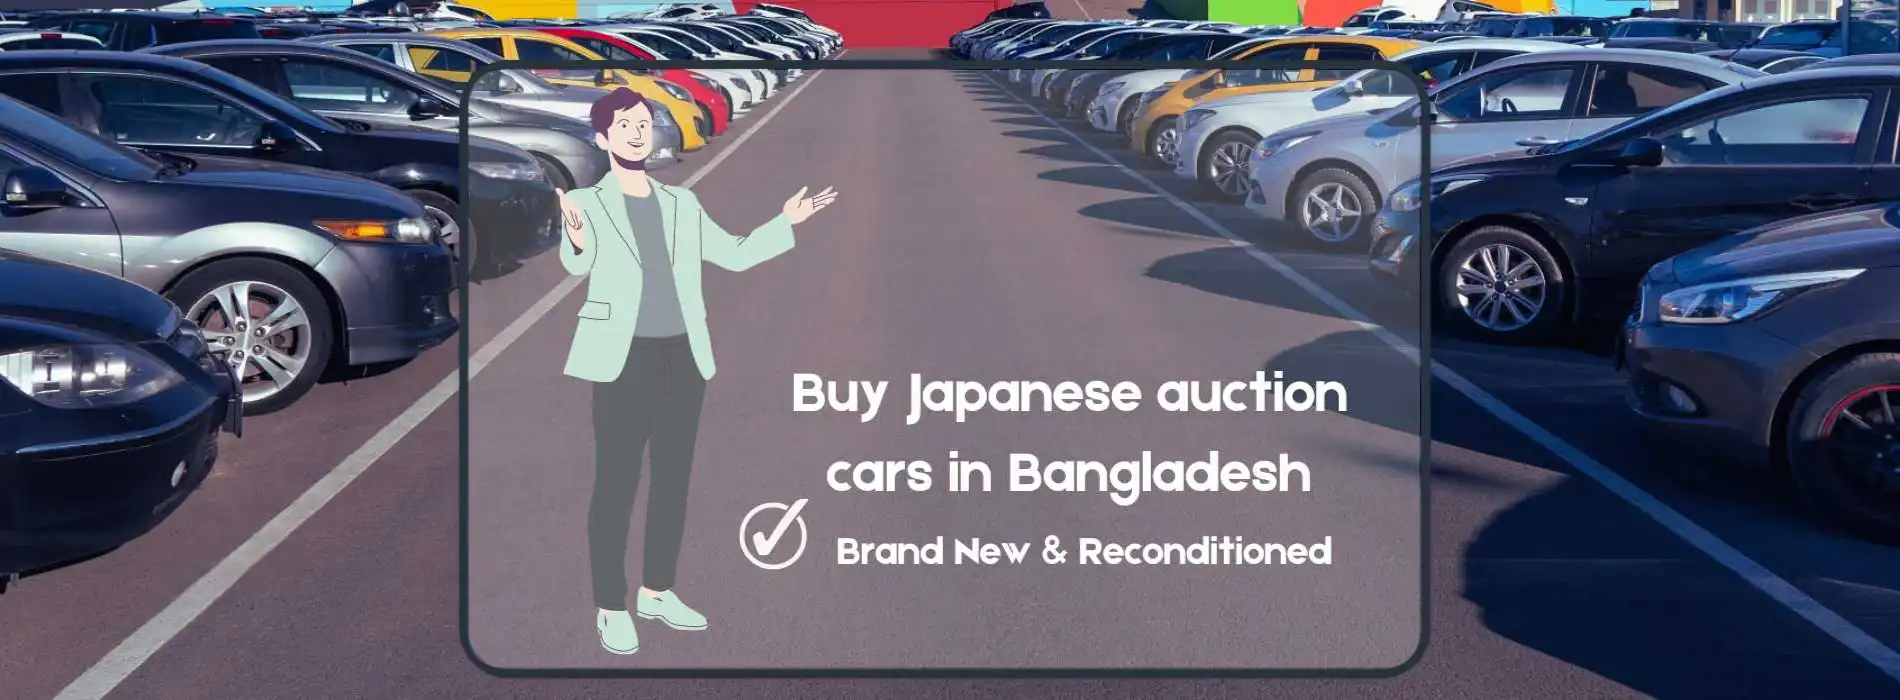 Buy Japanese auction cars in Bangladesh-CartheoryBD-Cover Image-2